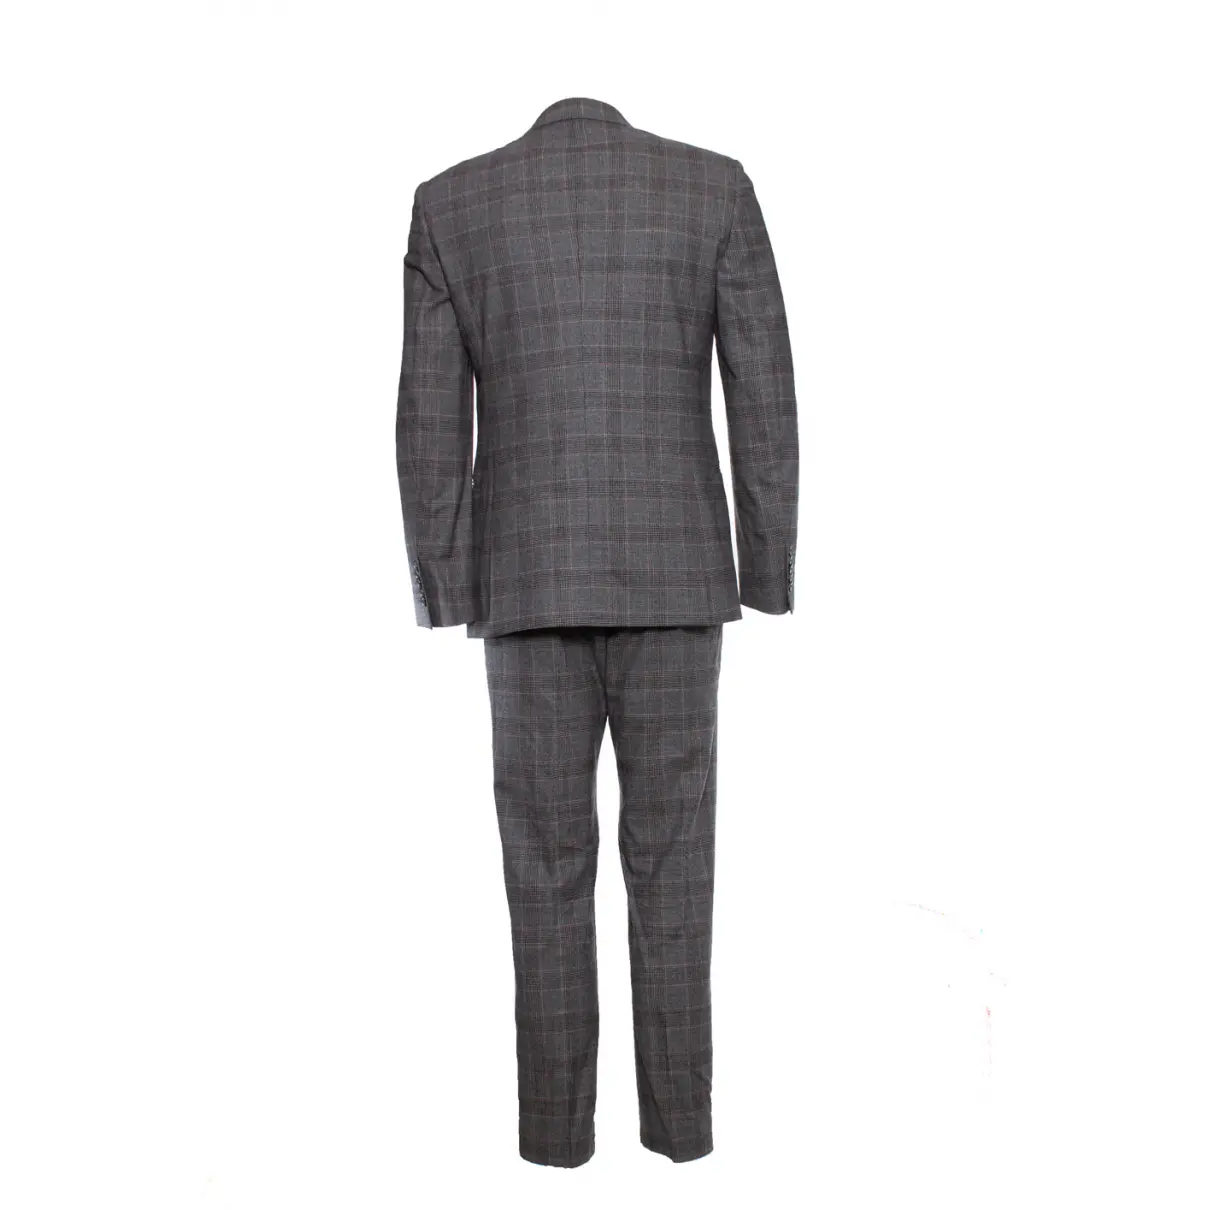 Buy Paul Smith Wool suit online